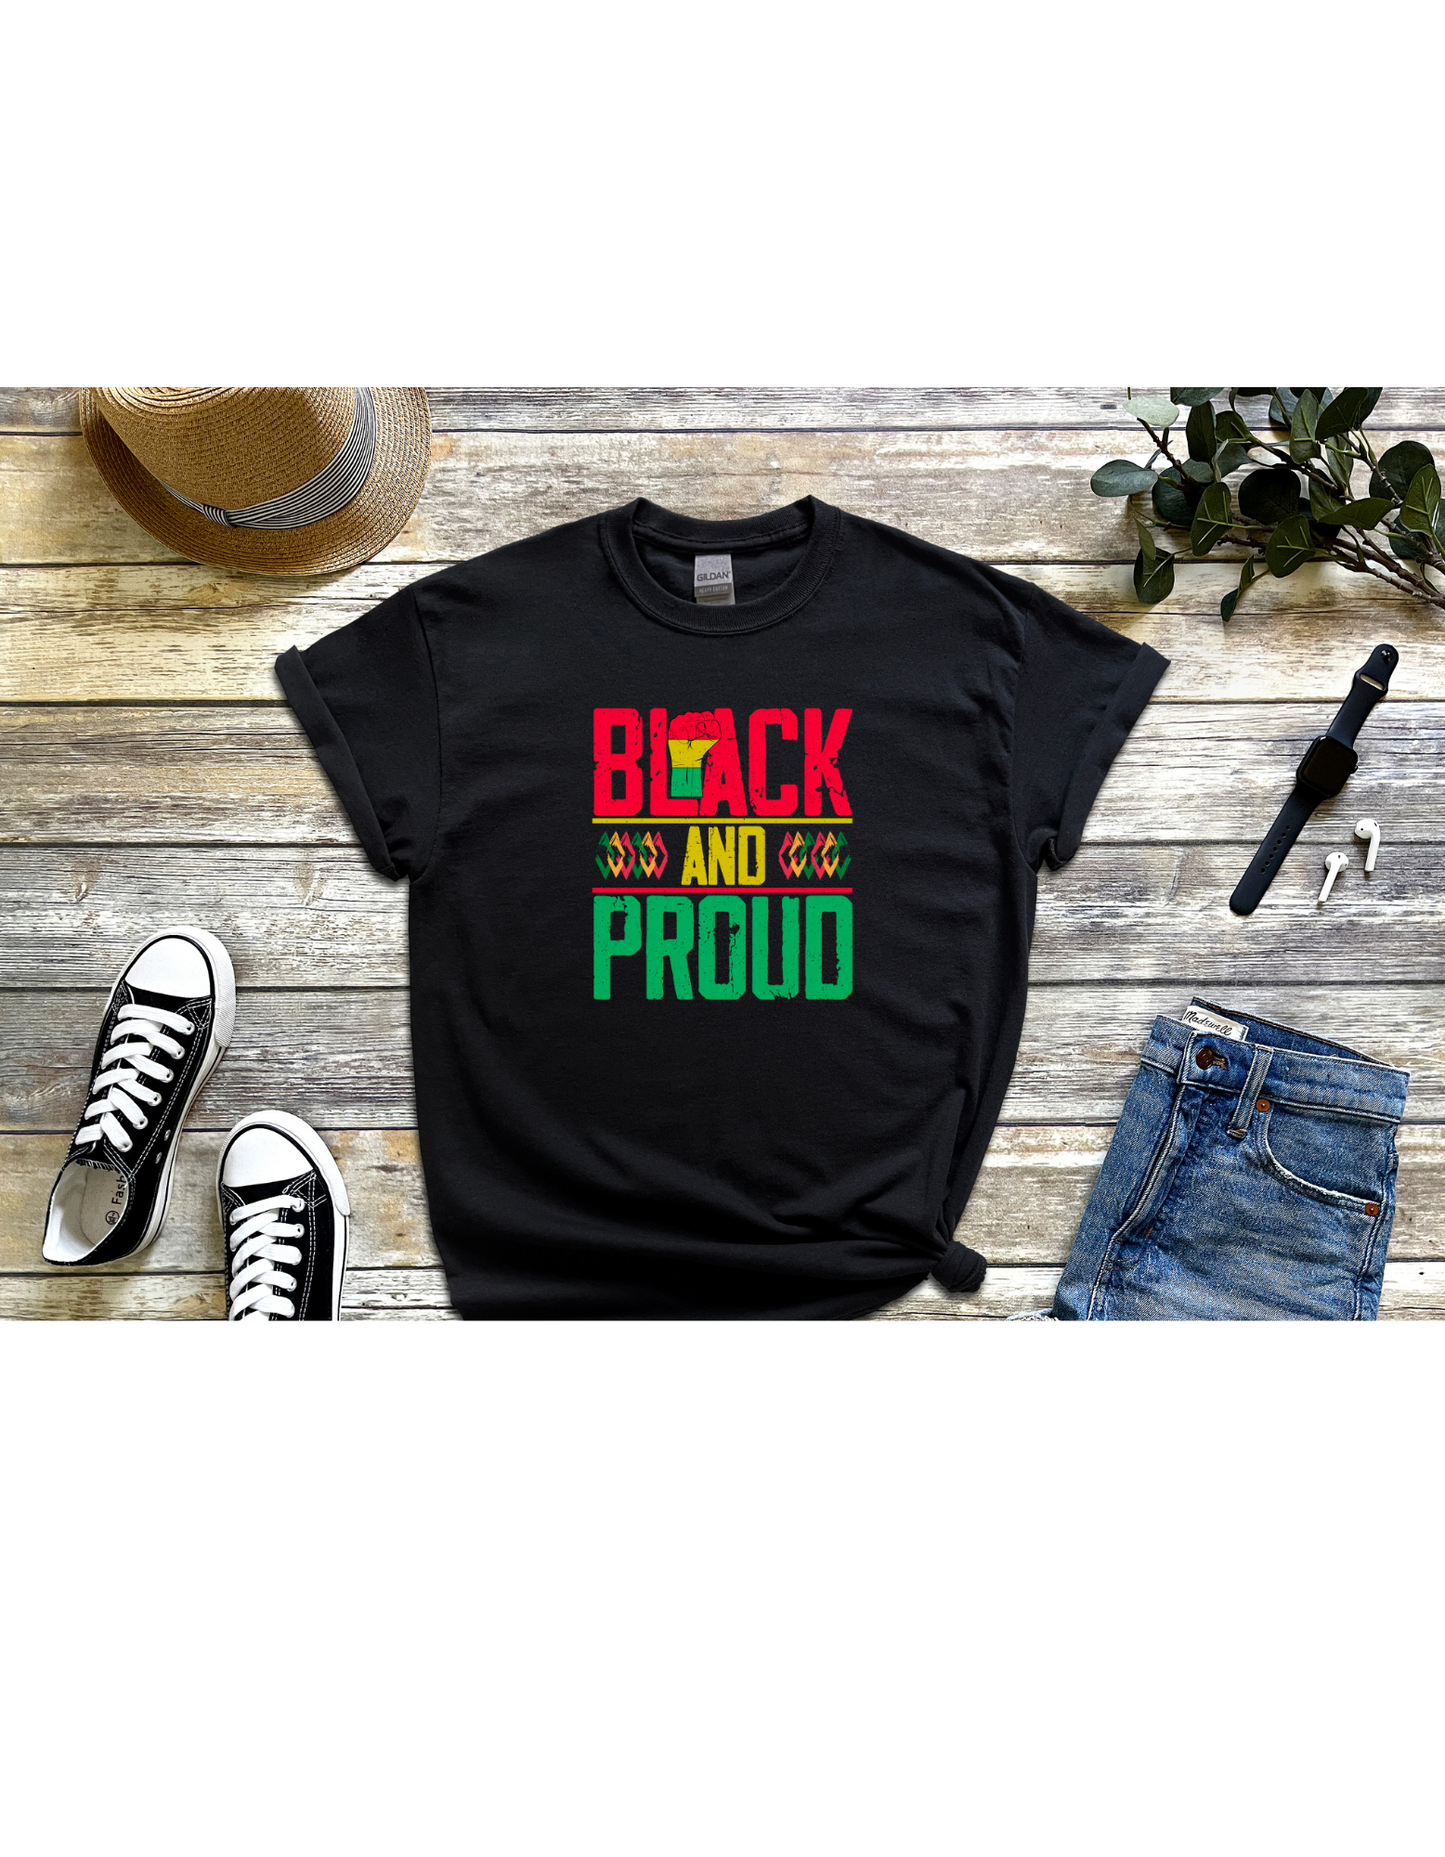 Black And Proud T-Shirt, Black History Shirt, Juneteenth Shirt